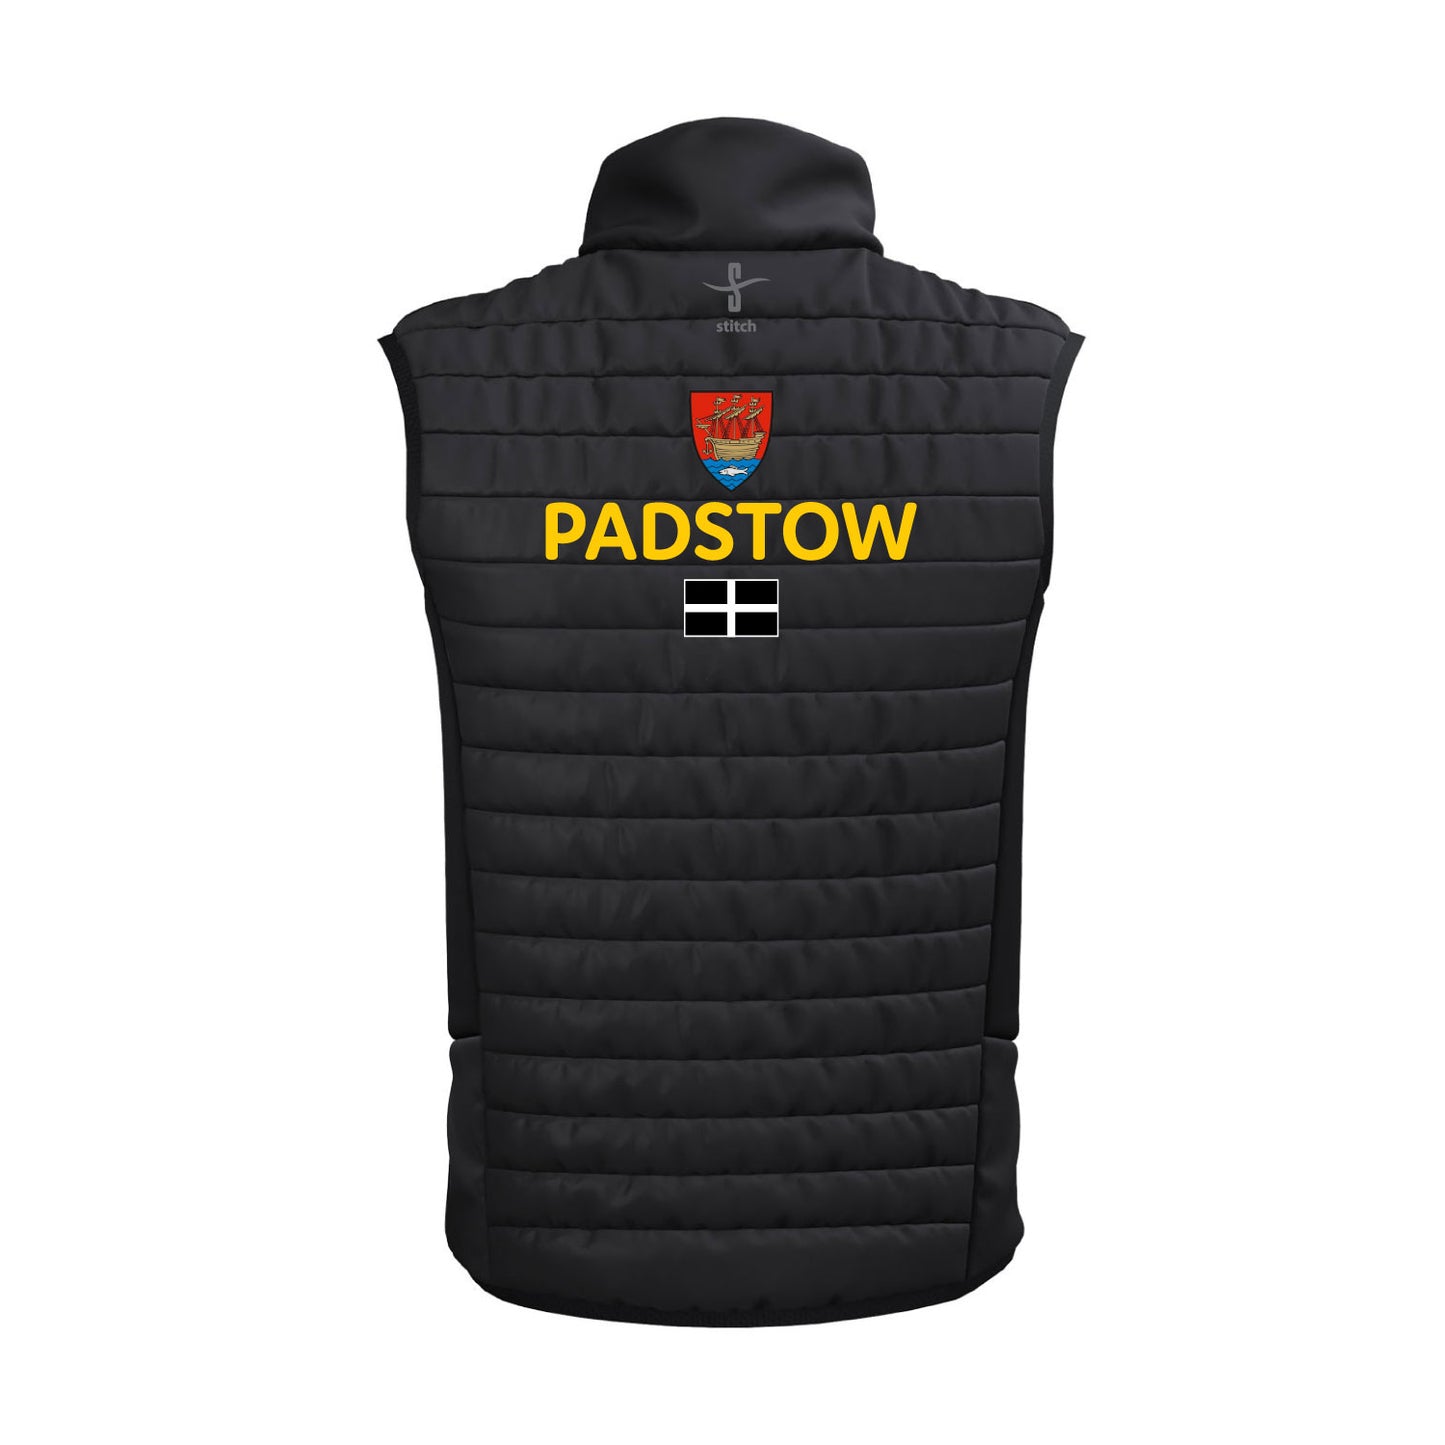 Padstow Rowing Club Apex Gilet